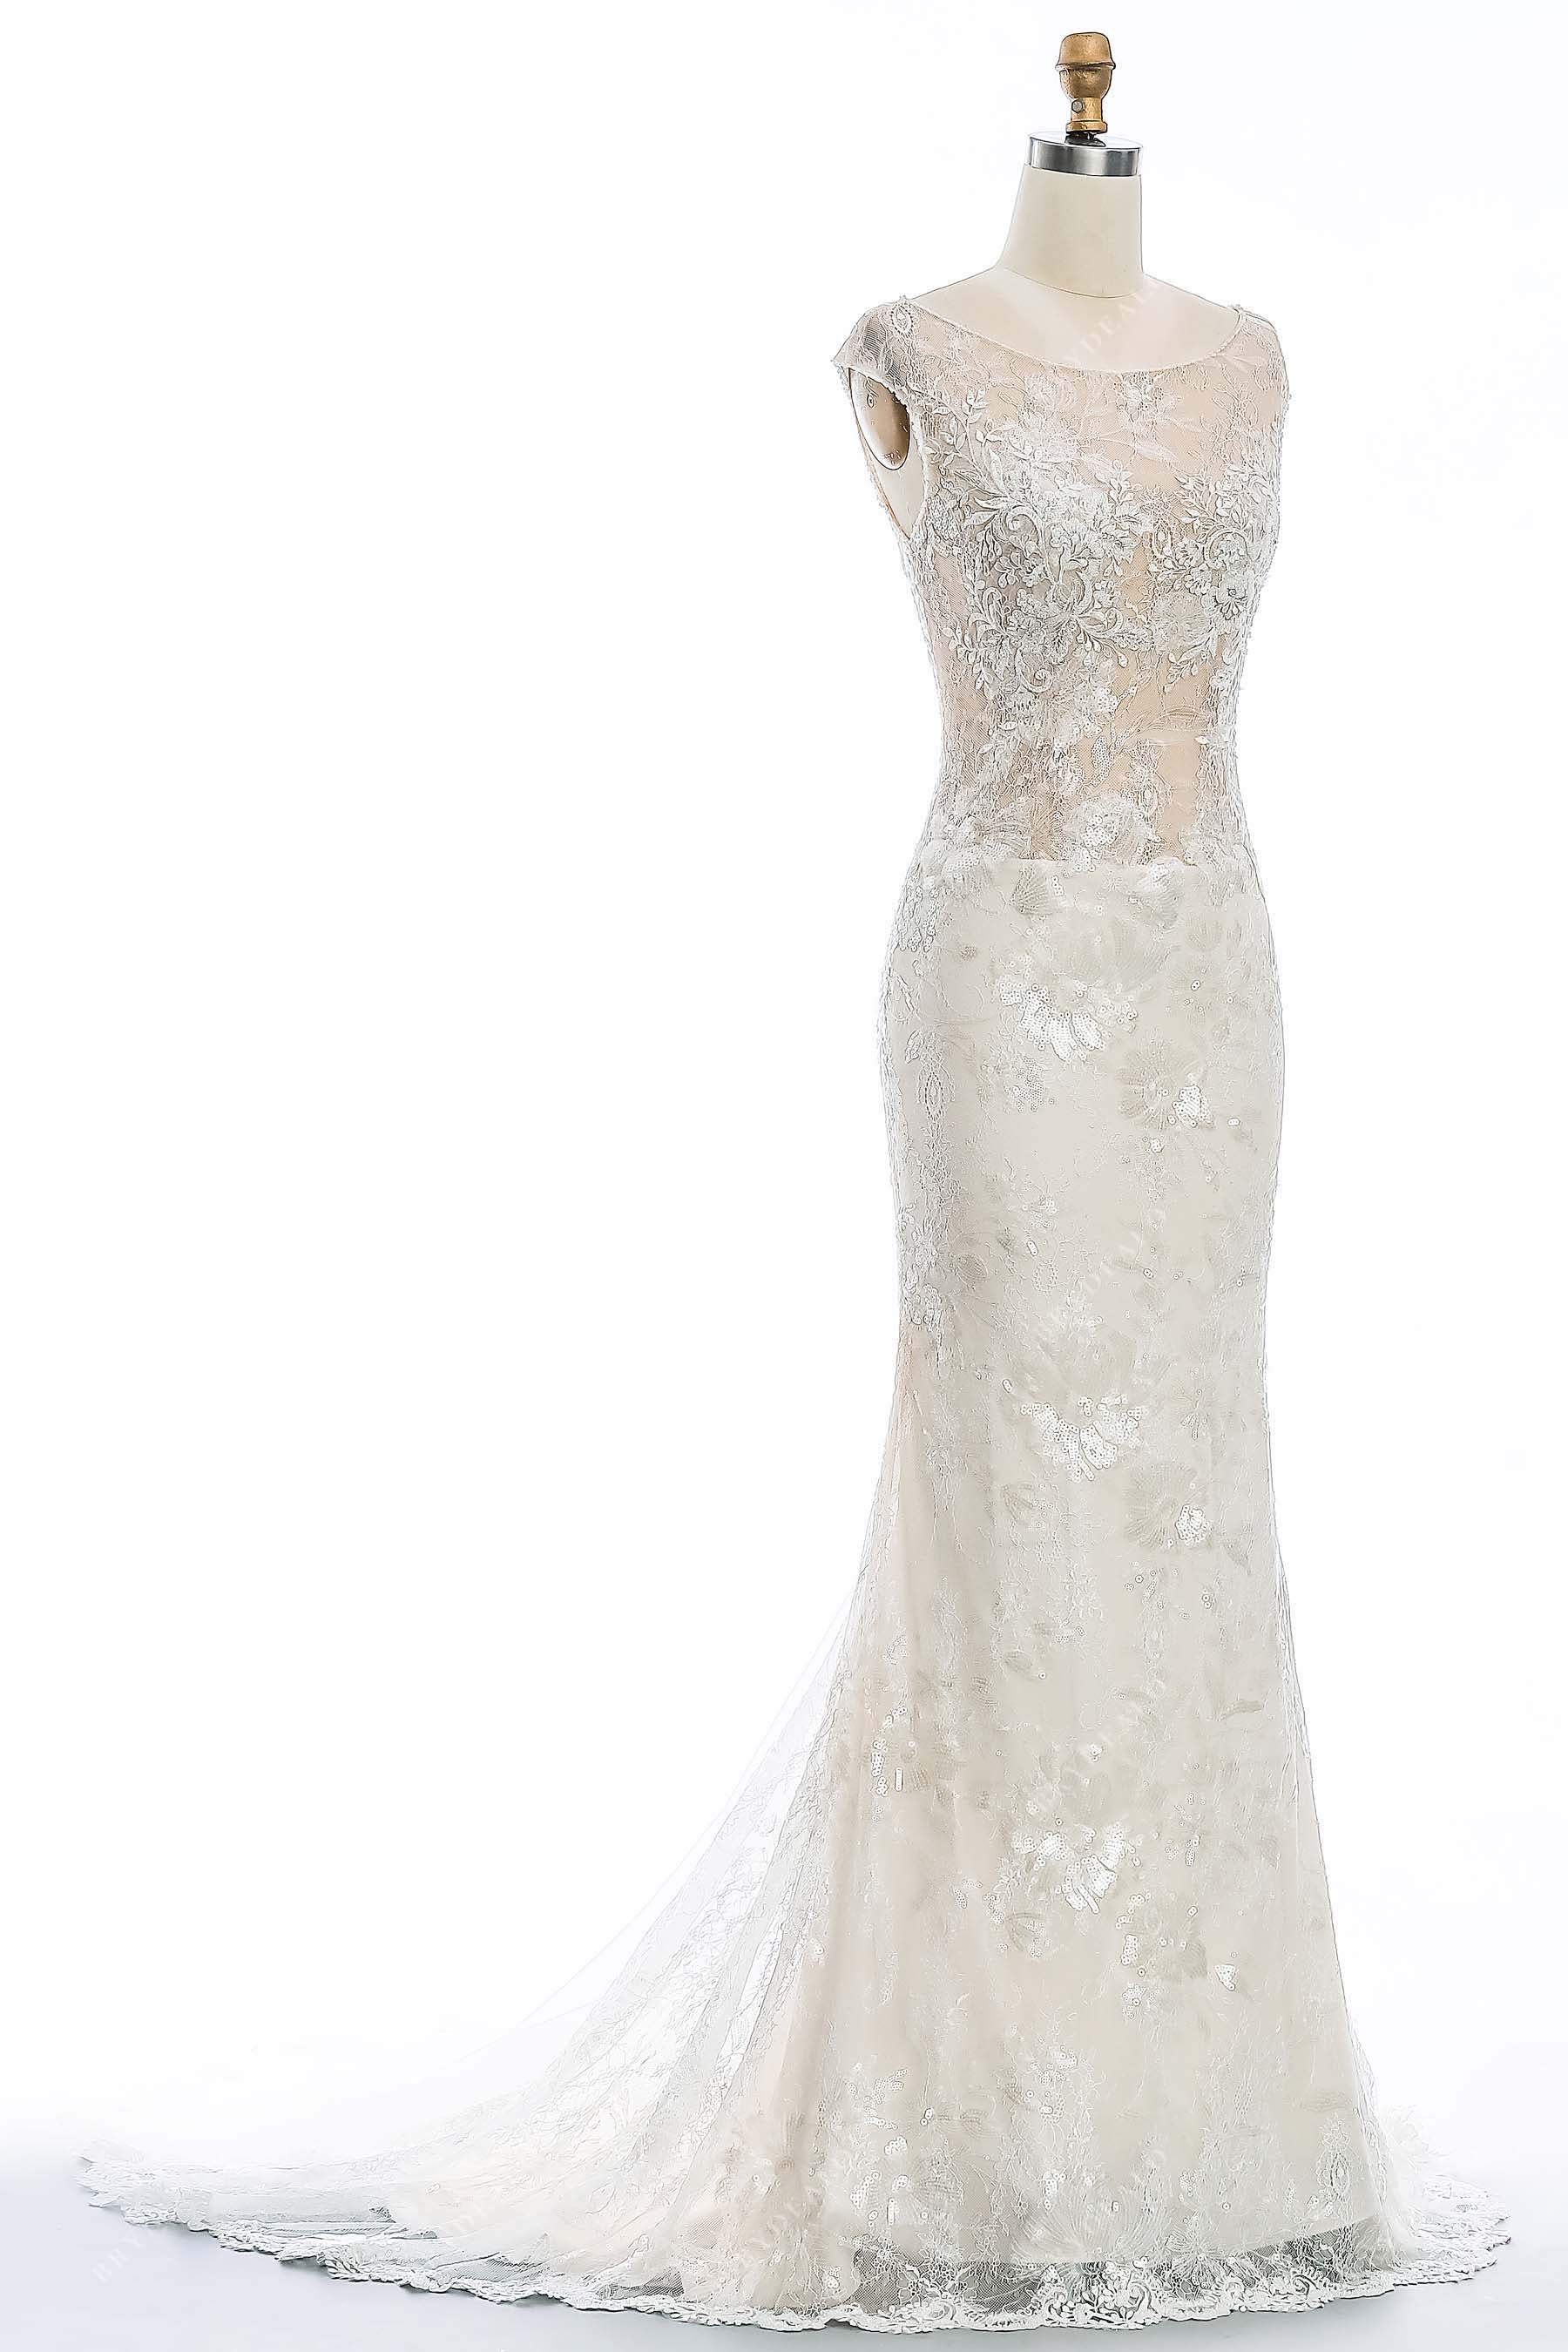 Beautiful Spring & Fall Wedding Dress: Illusion Bodice, Cap Sleeves, Lace  Godet